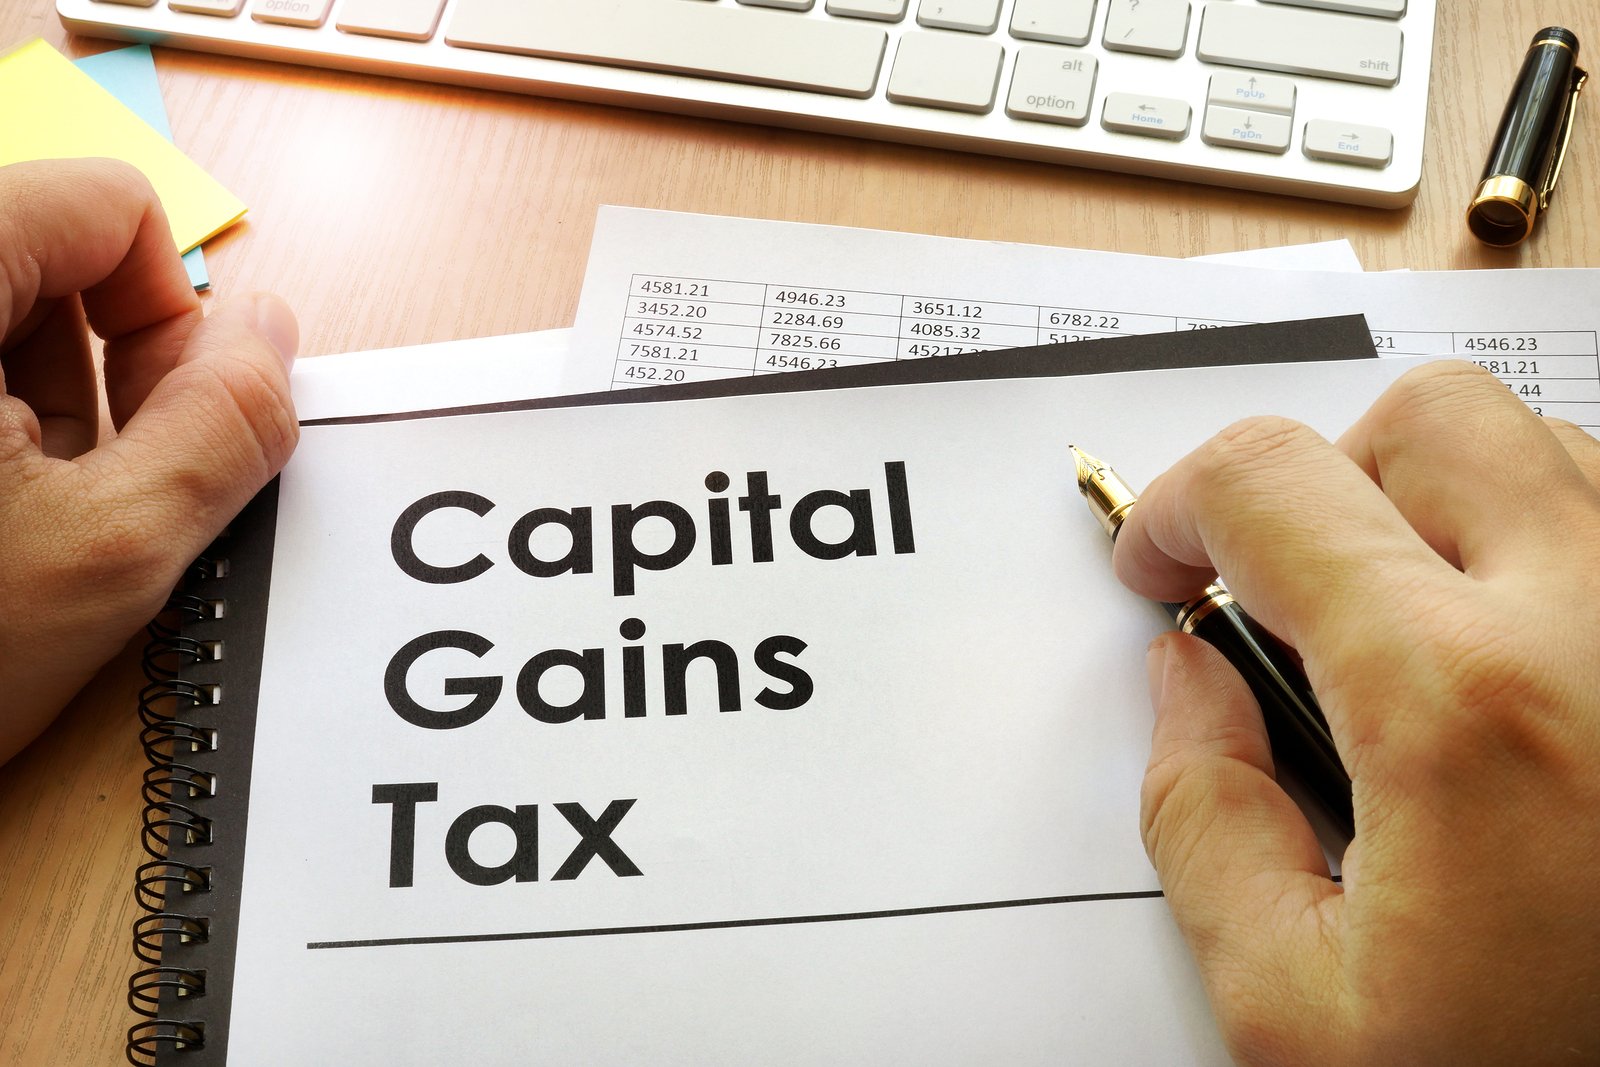 Sunstate explains Capital Gains Tax